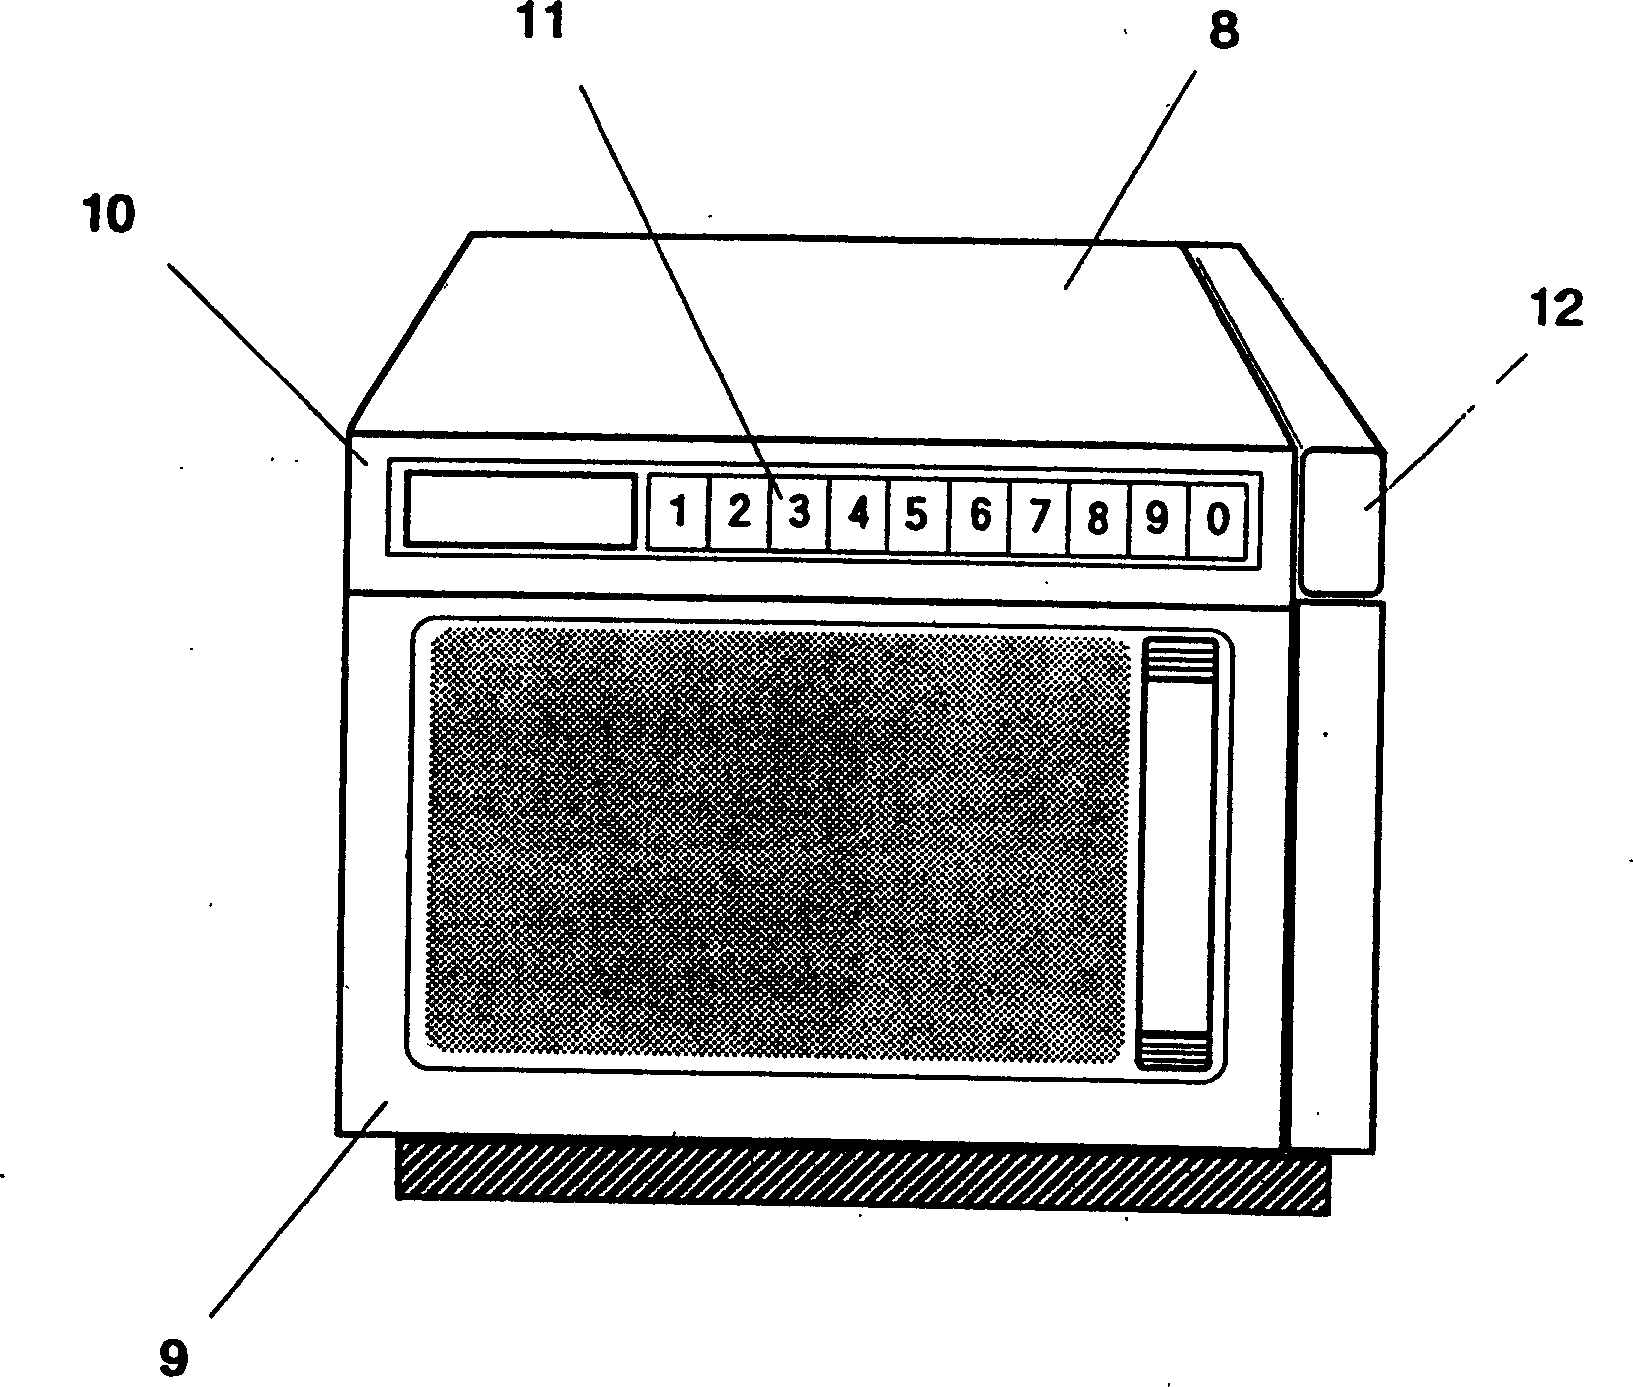 Microwave heating device